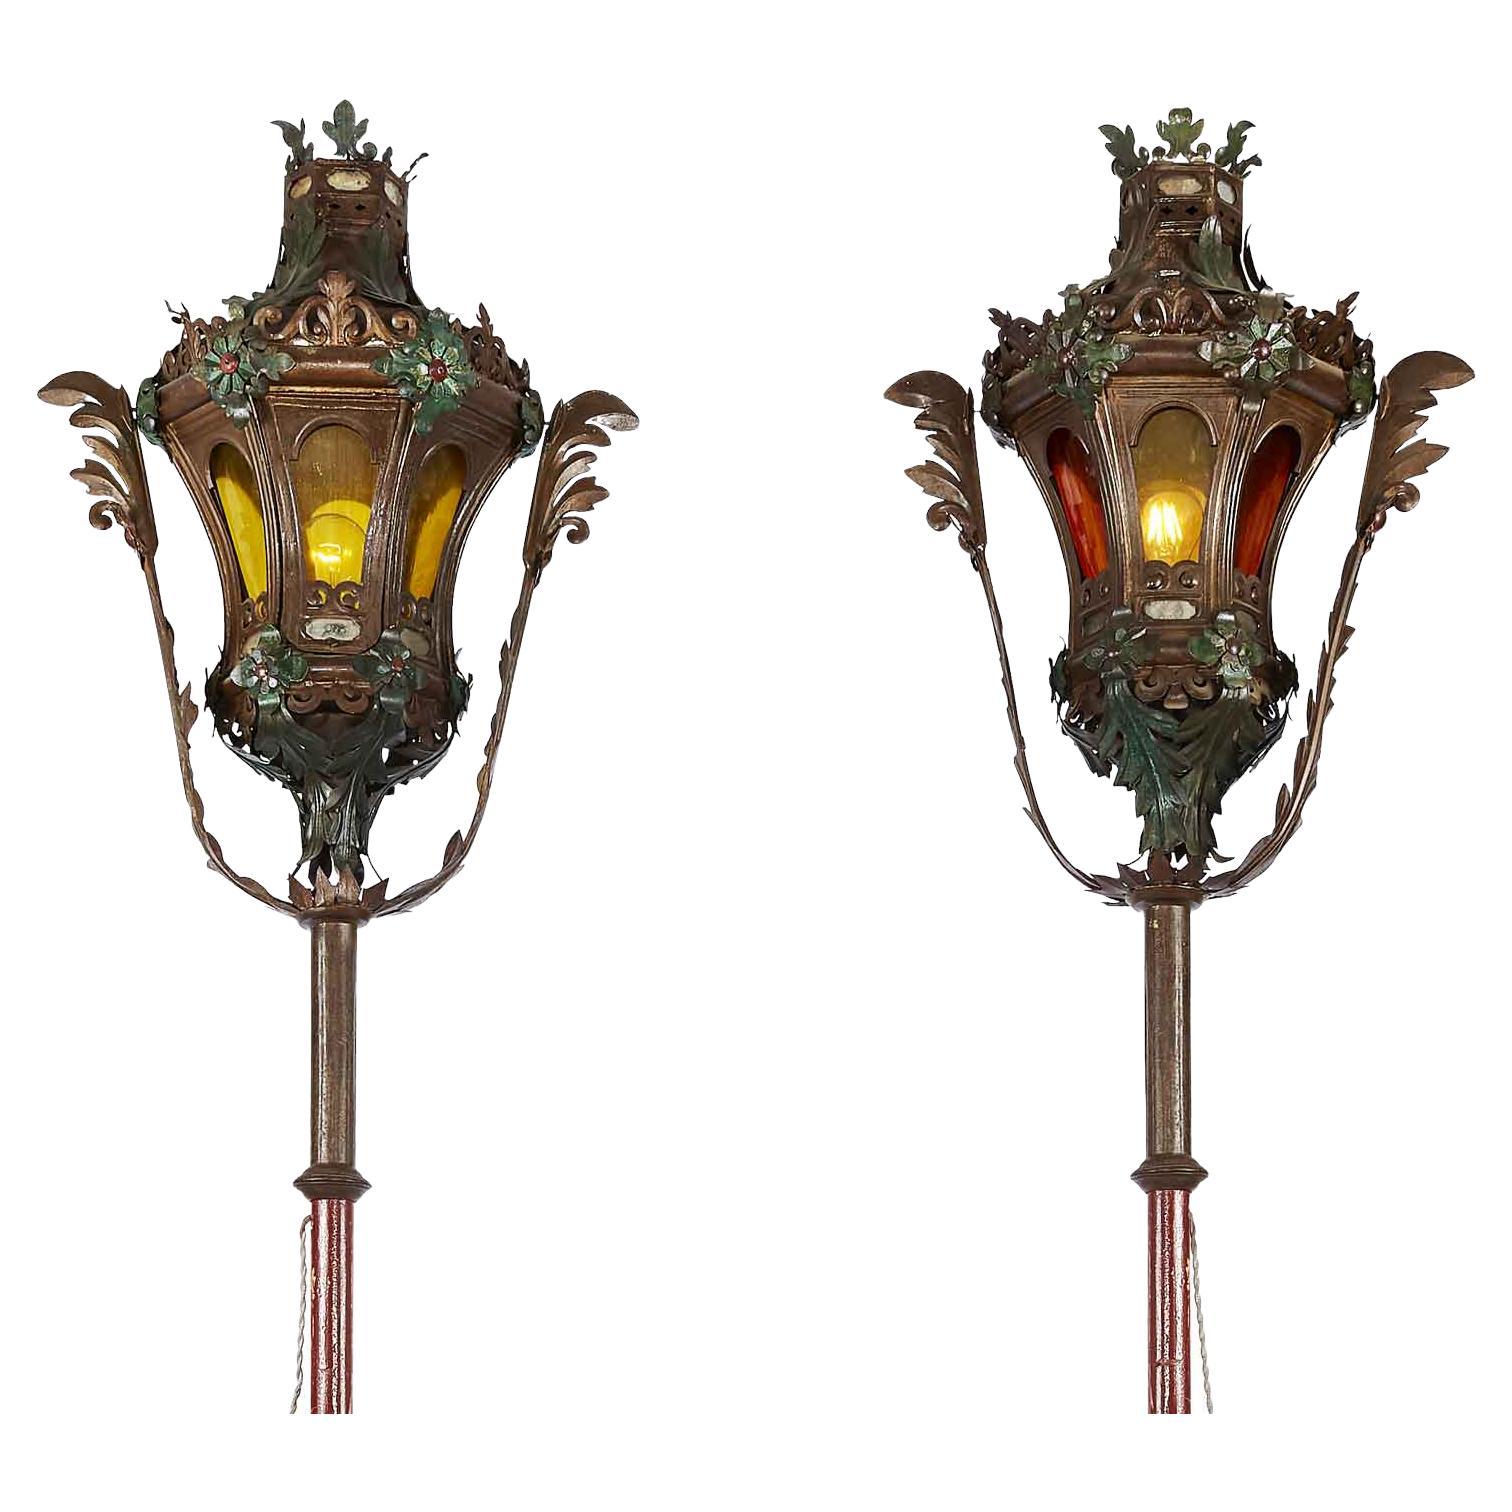 Pair of Venetian Lanterns 19th Century Italian Gondola Lamps Baroque Style